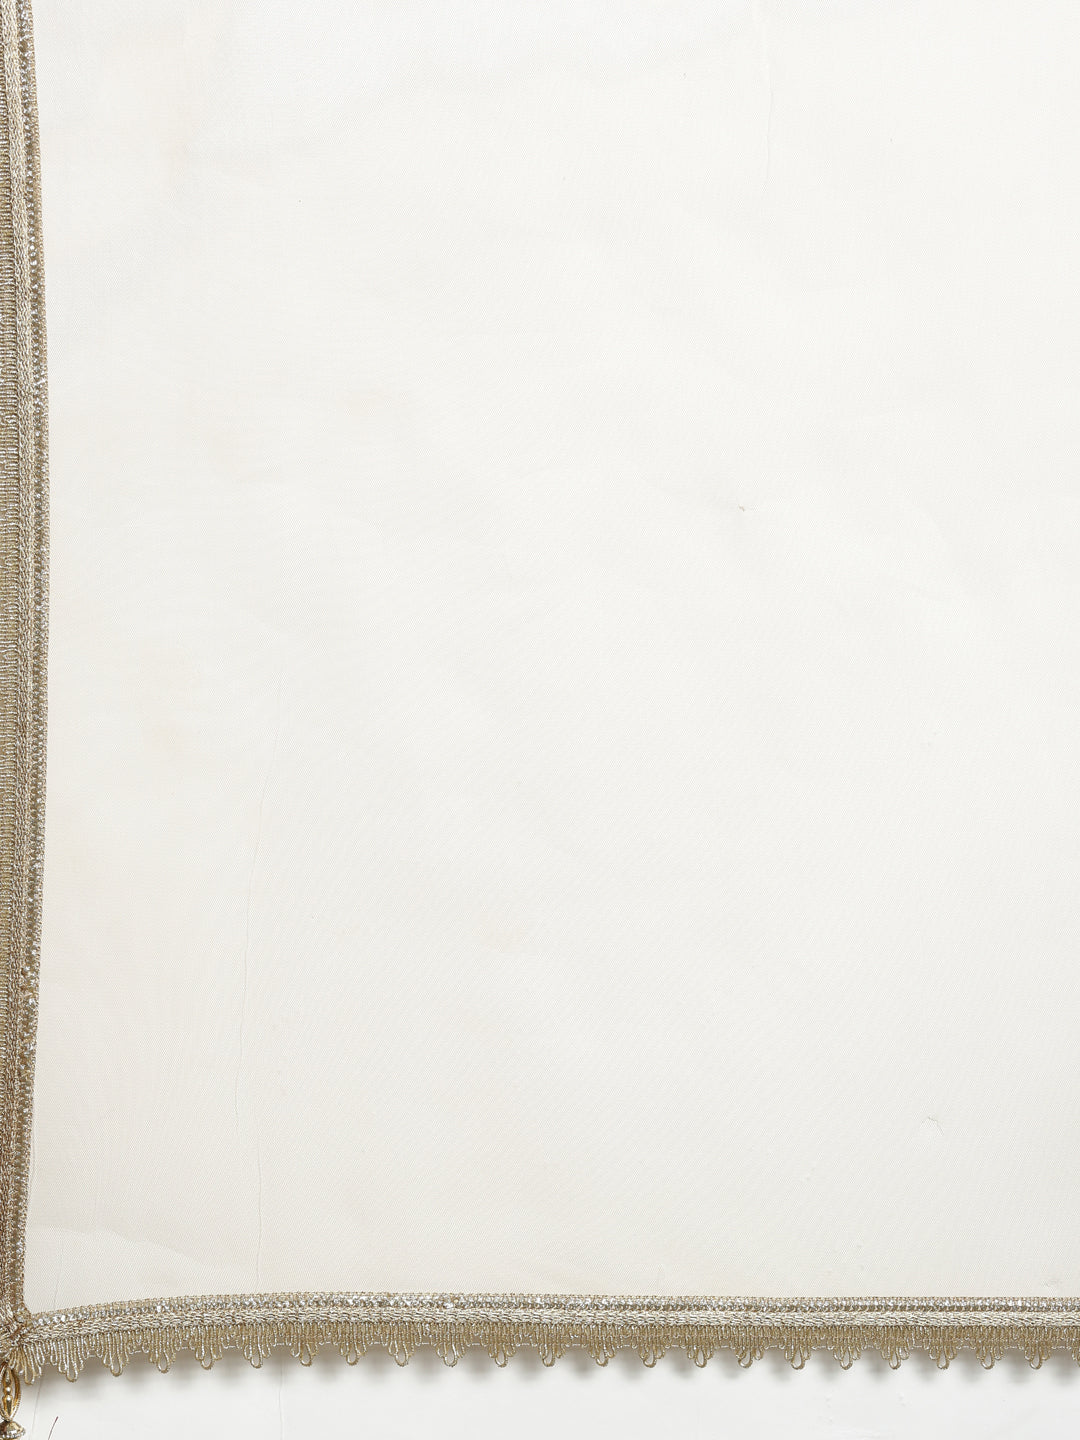 Neeru'S Beige Color, Georgette Fabric Suit-Anarkali